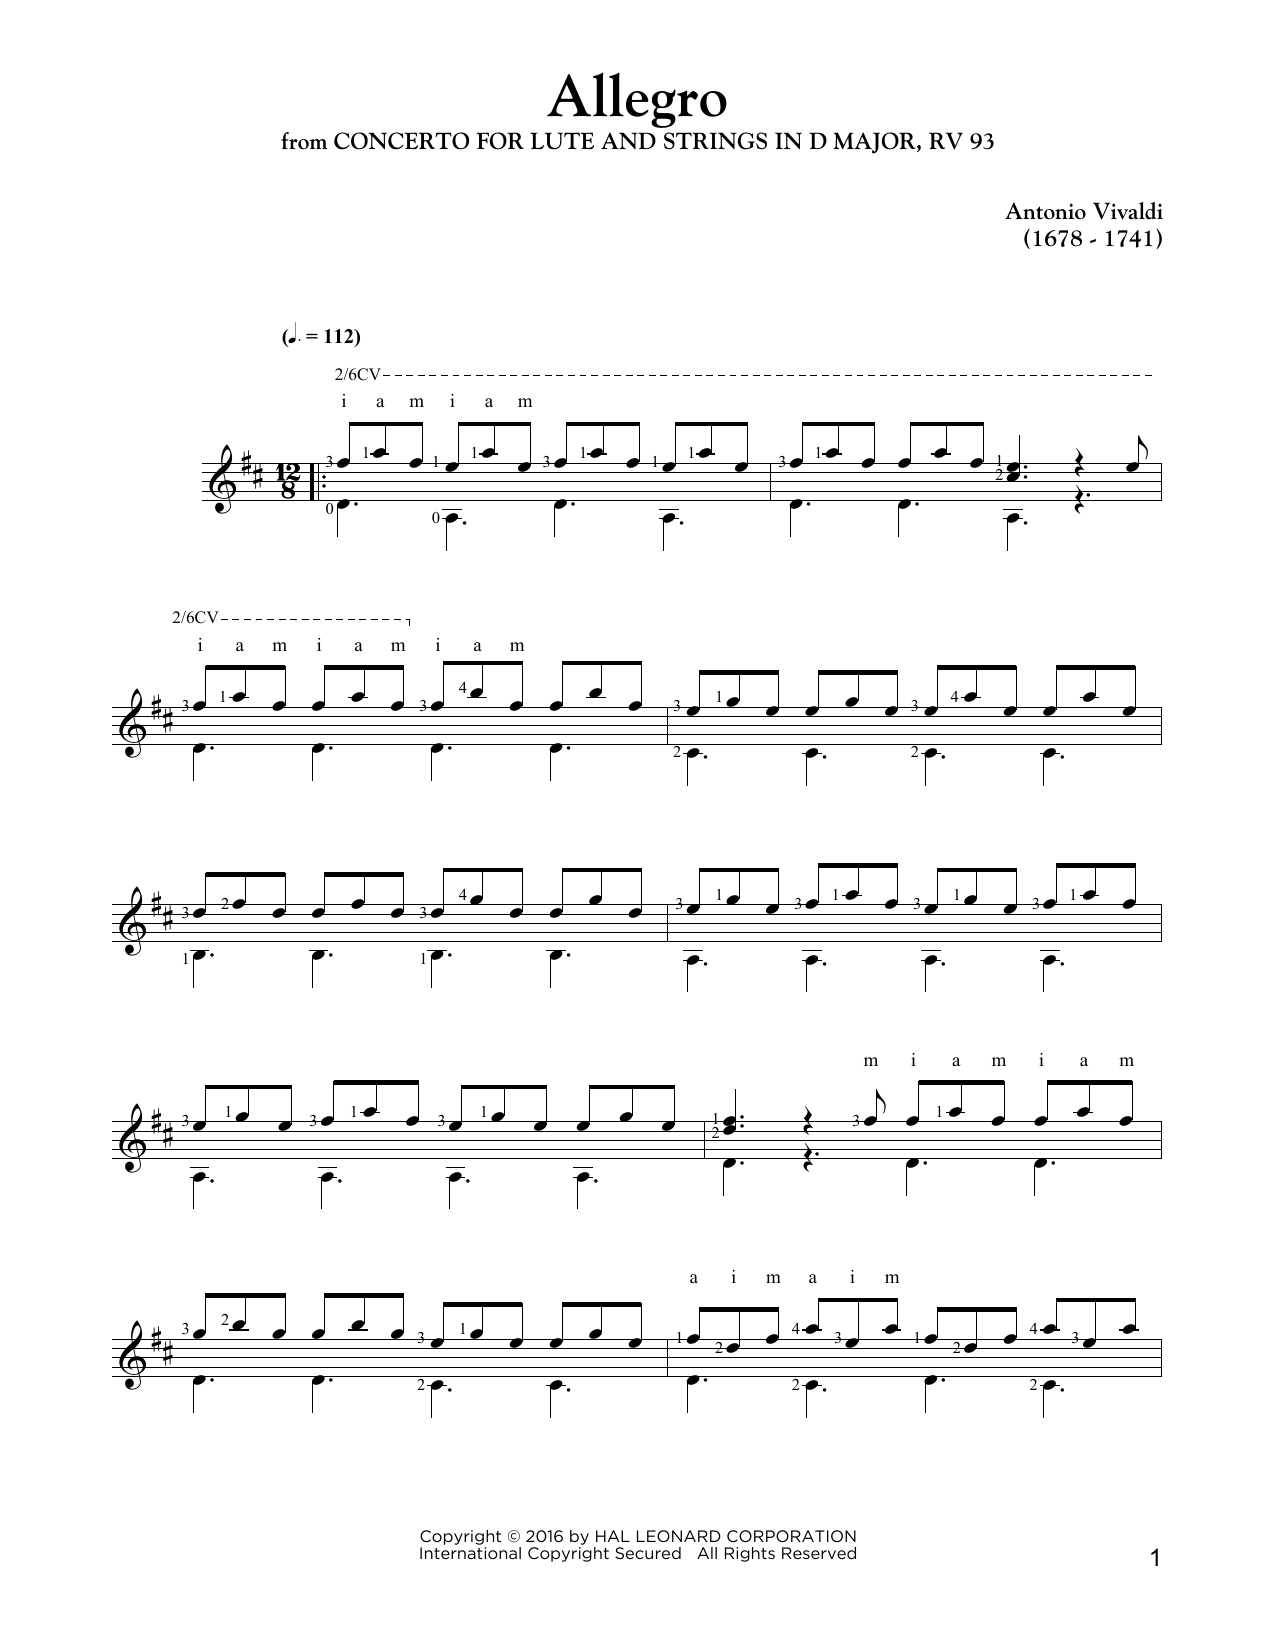 Antonio Vivaldi Allegro sheet music notes and chords arranged for Solo Guitar